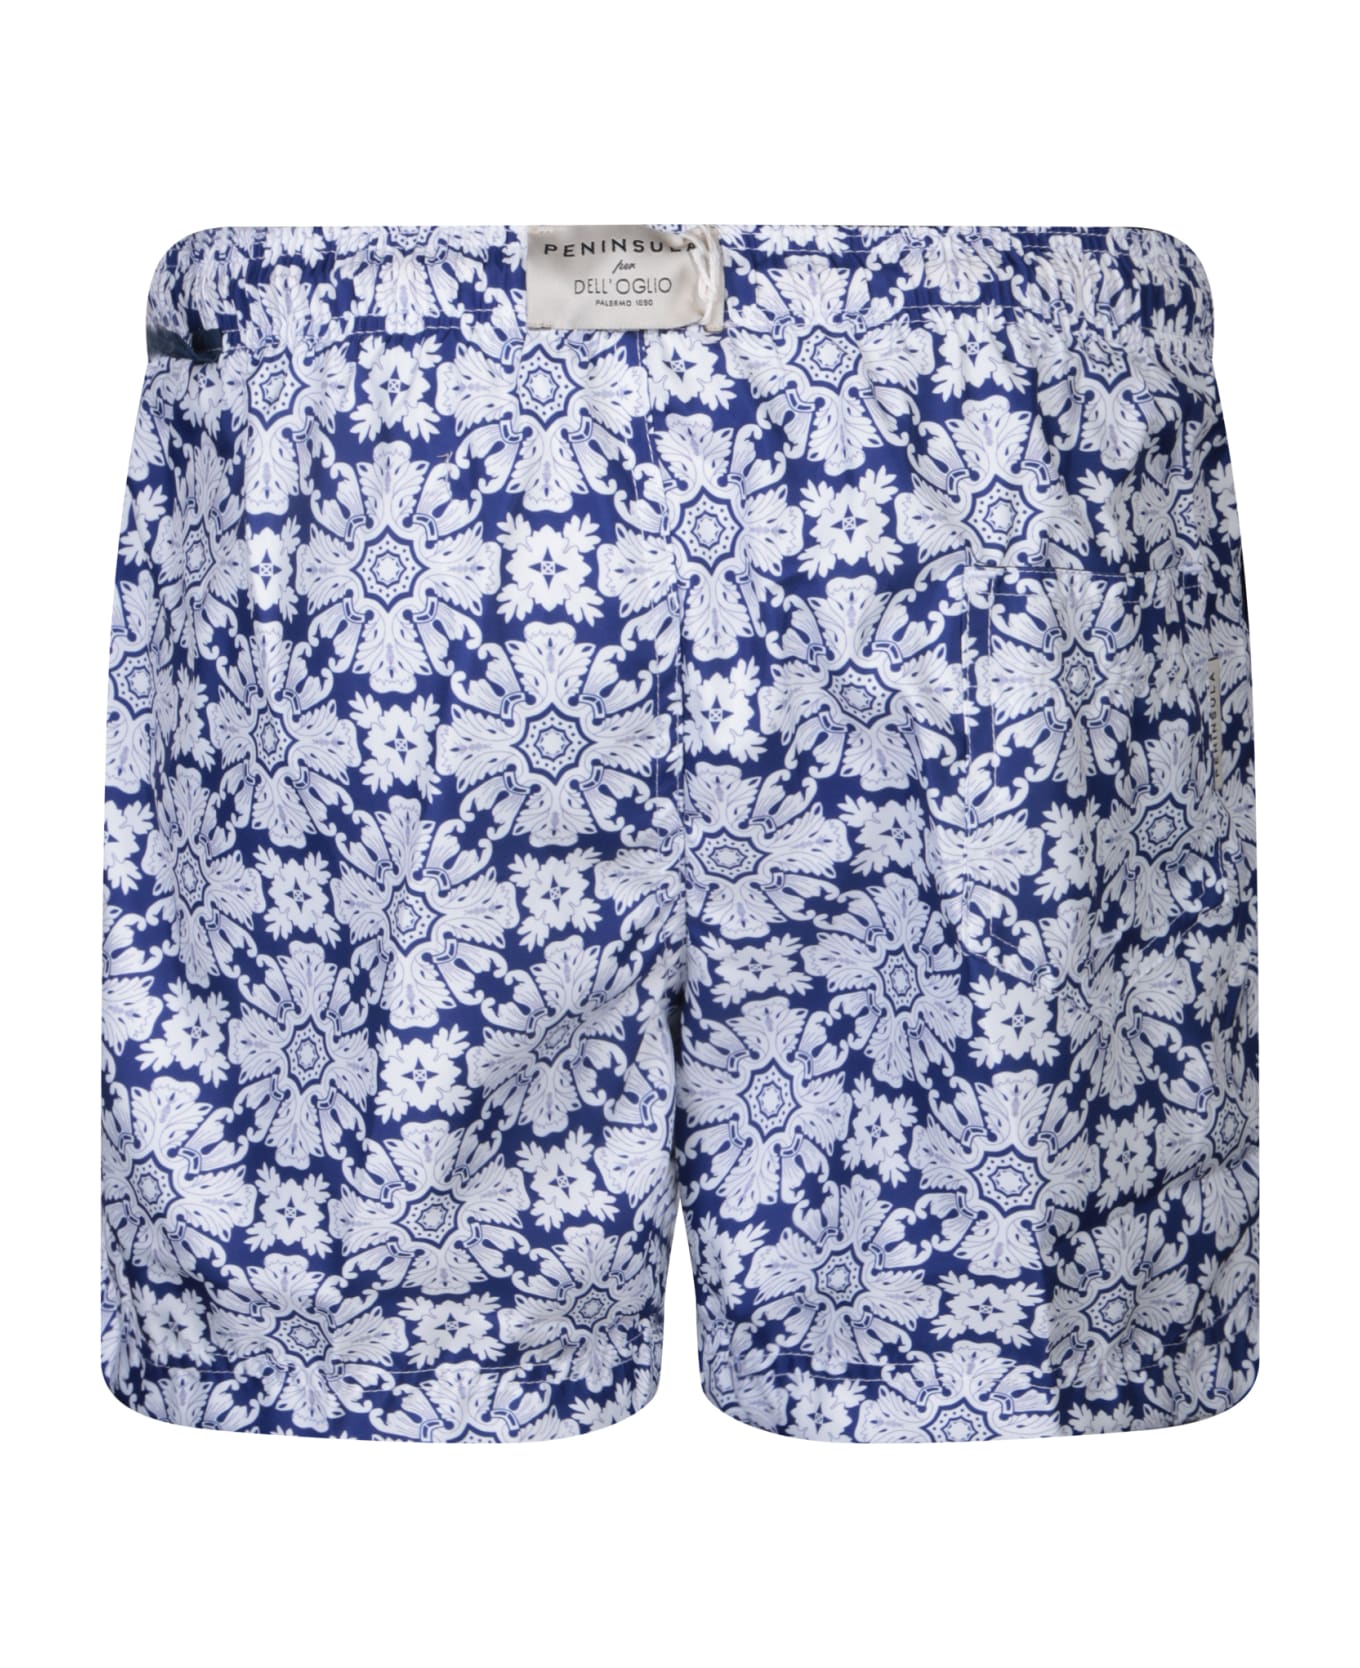 Peninsula Swimwear Floral Pattern Swim Shorts White/blue - Blue